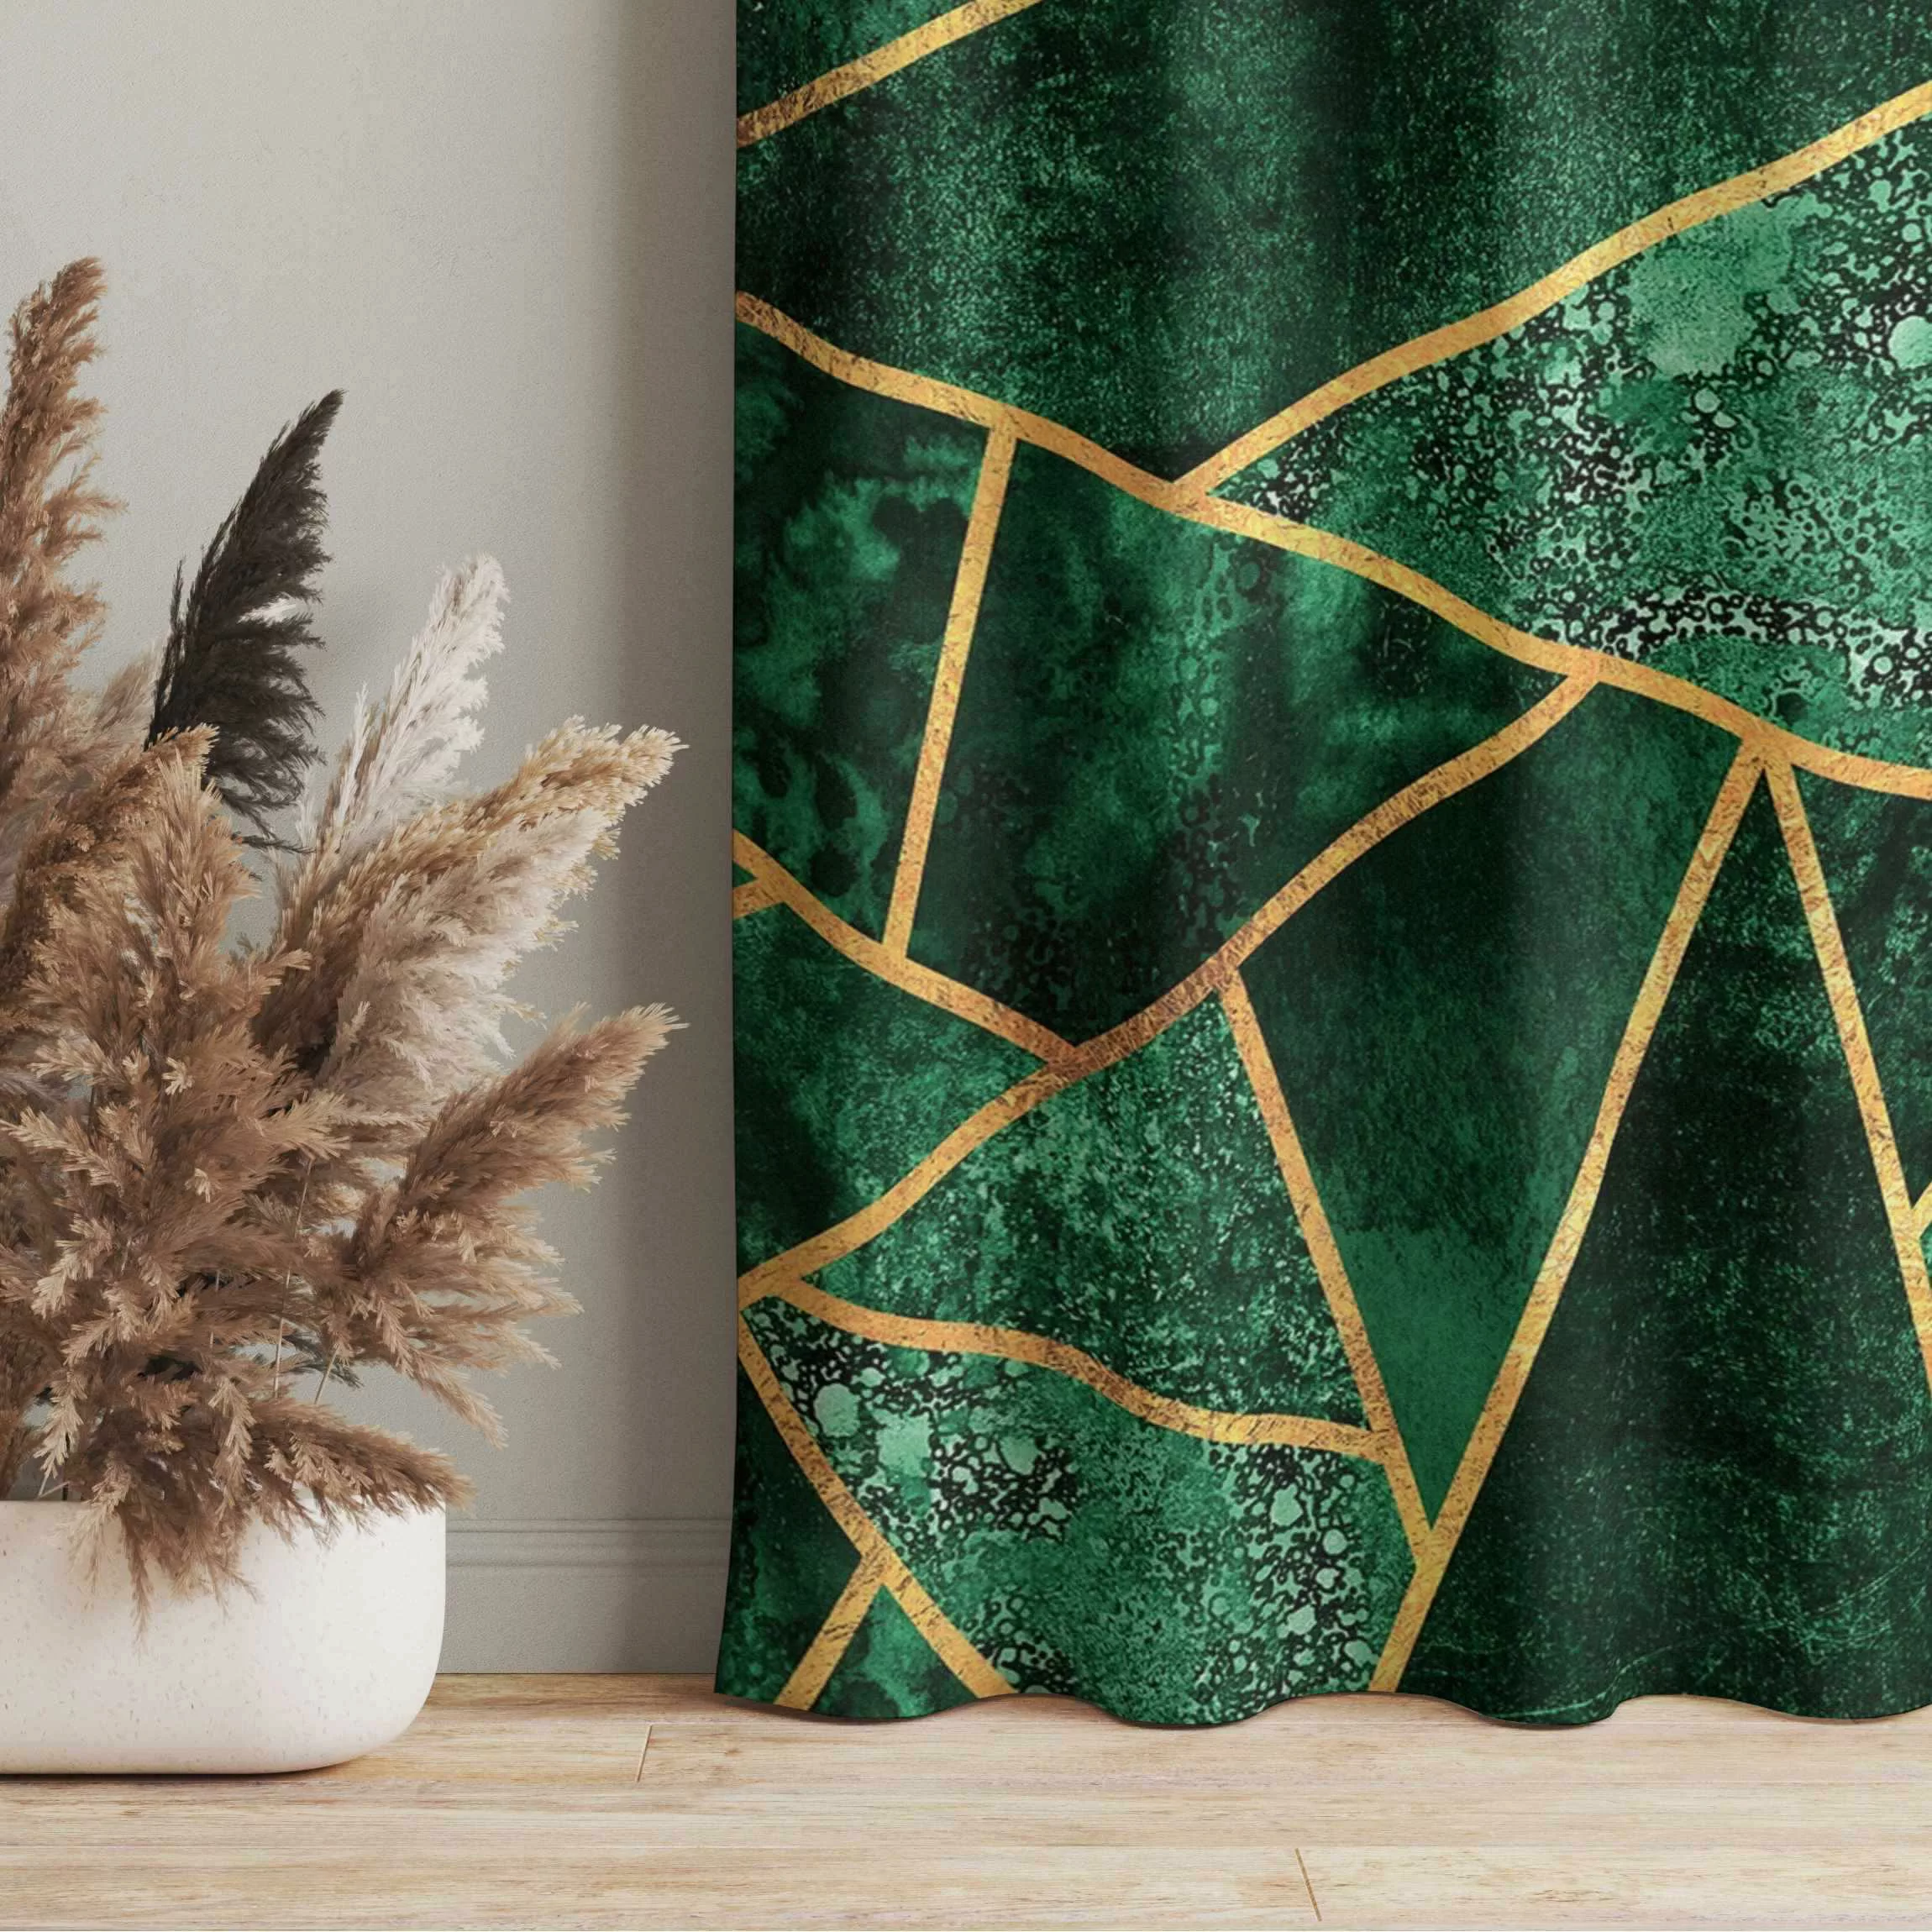 Vorhang Dunkler Smaragd mit Gold günstig online kaufen